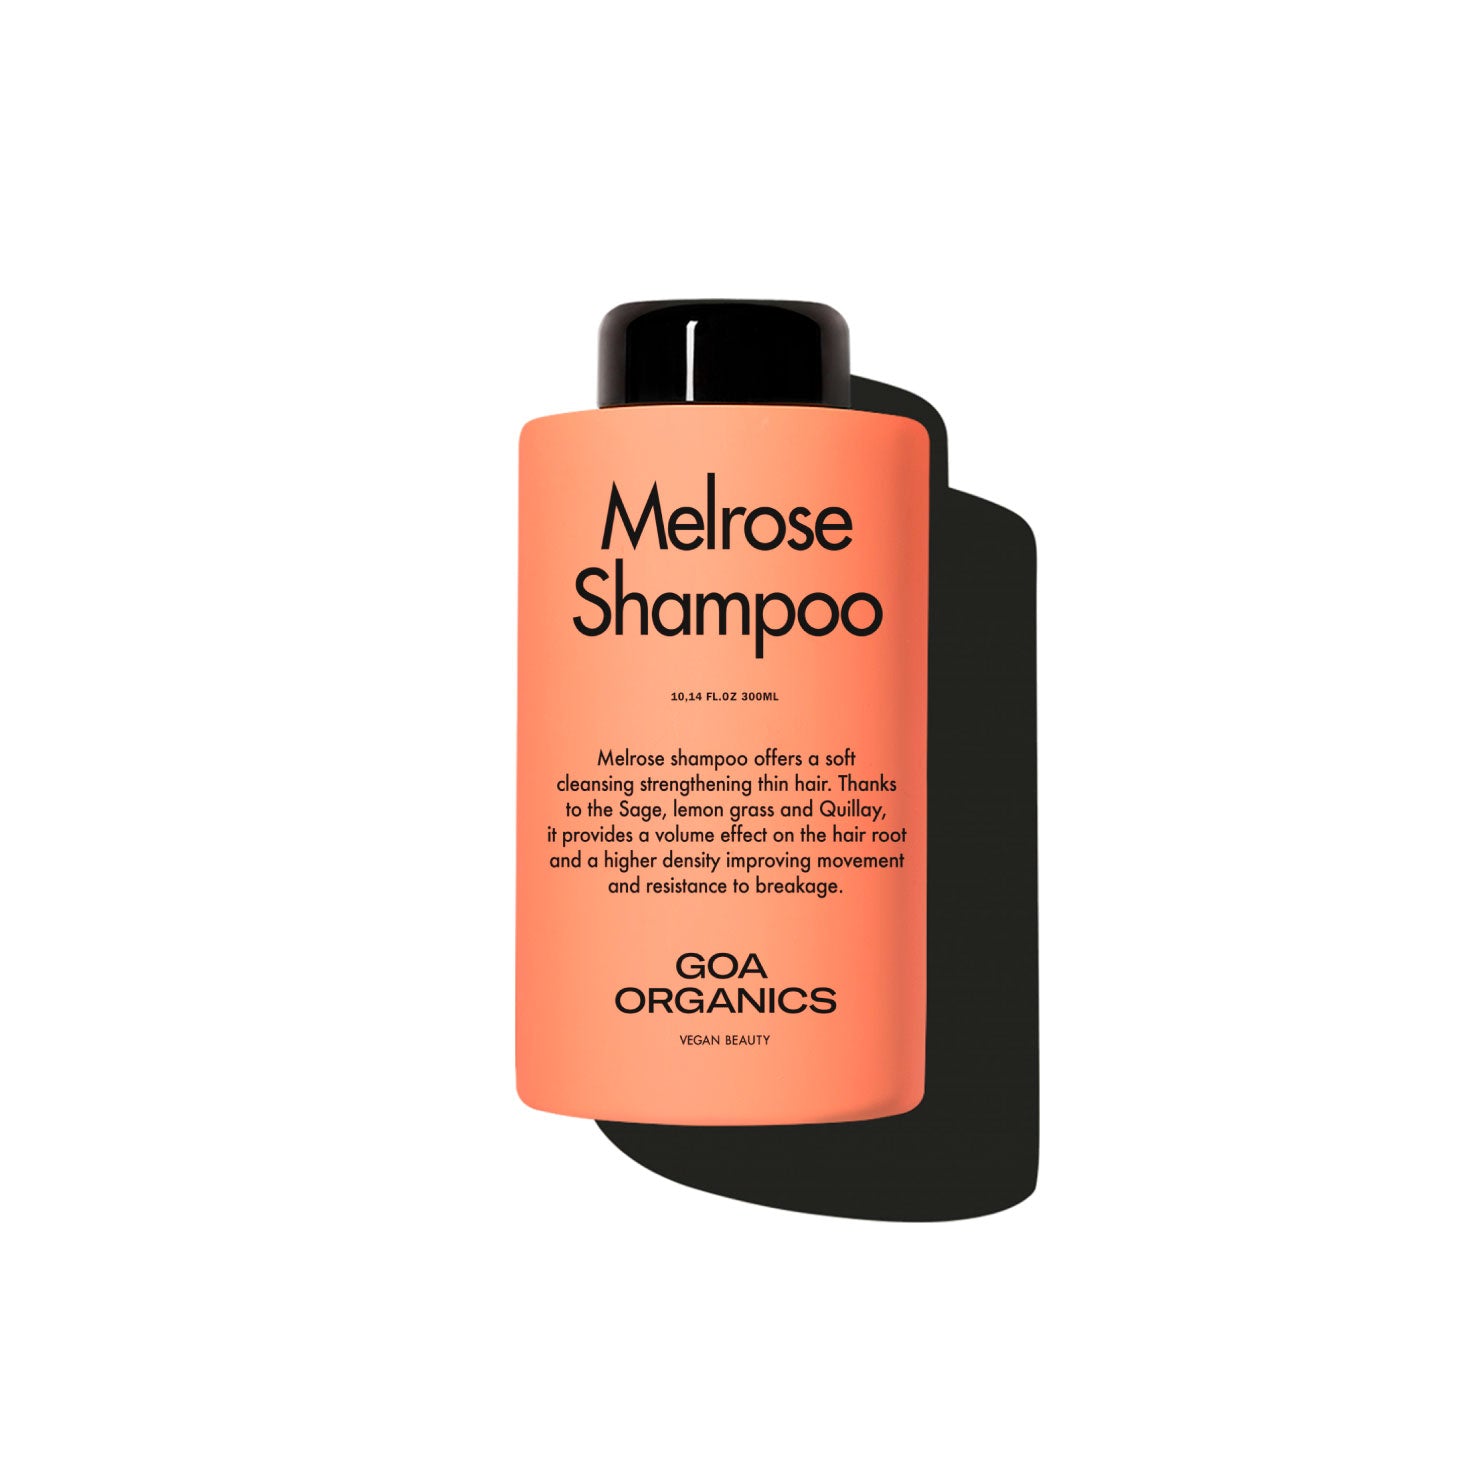 Melrose Shampoo